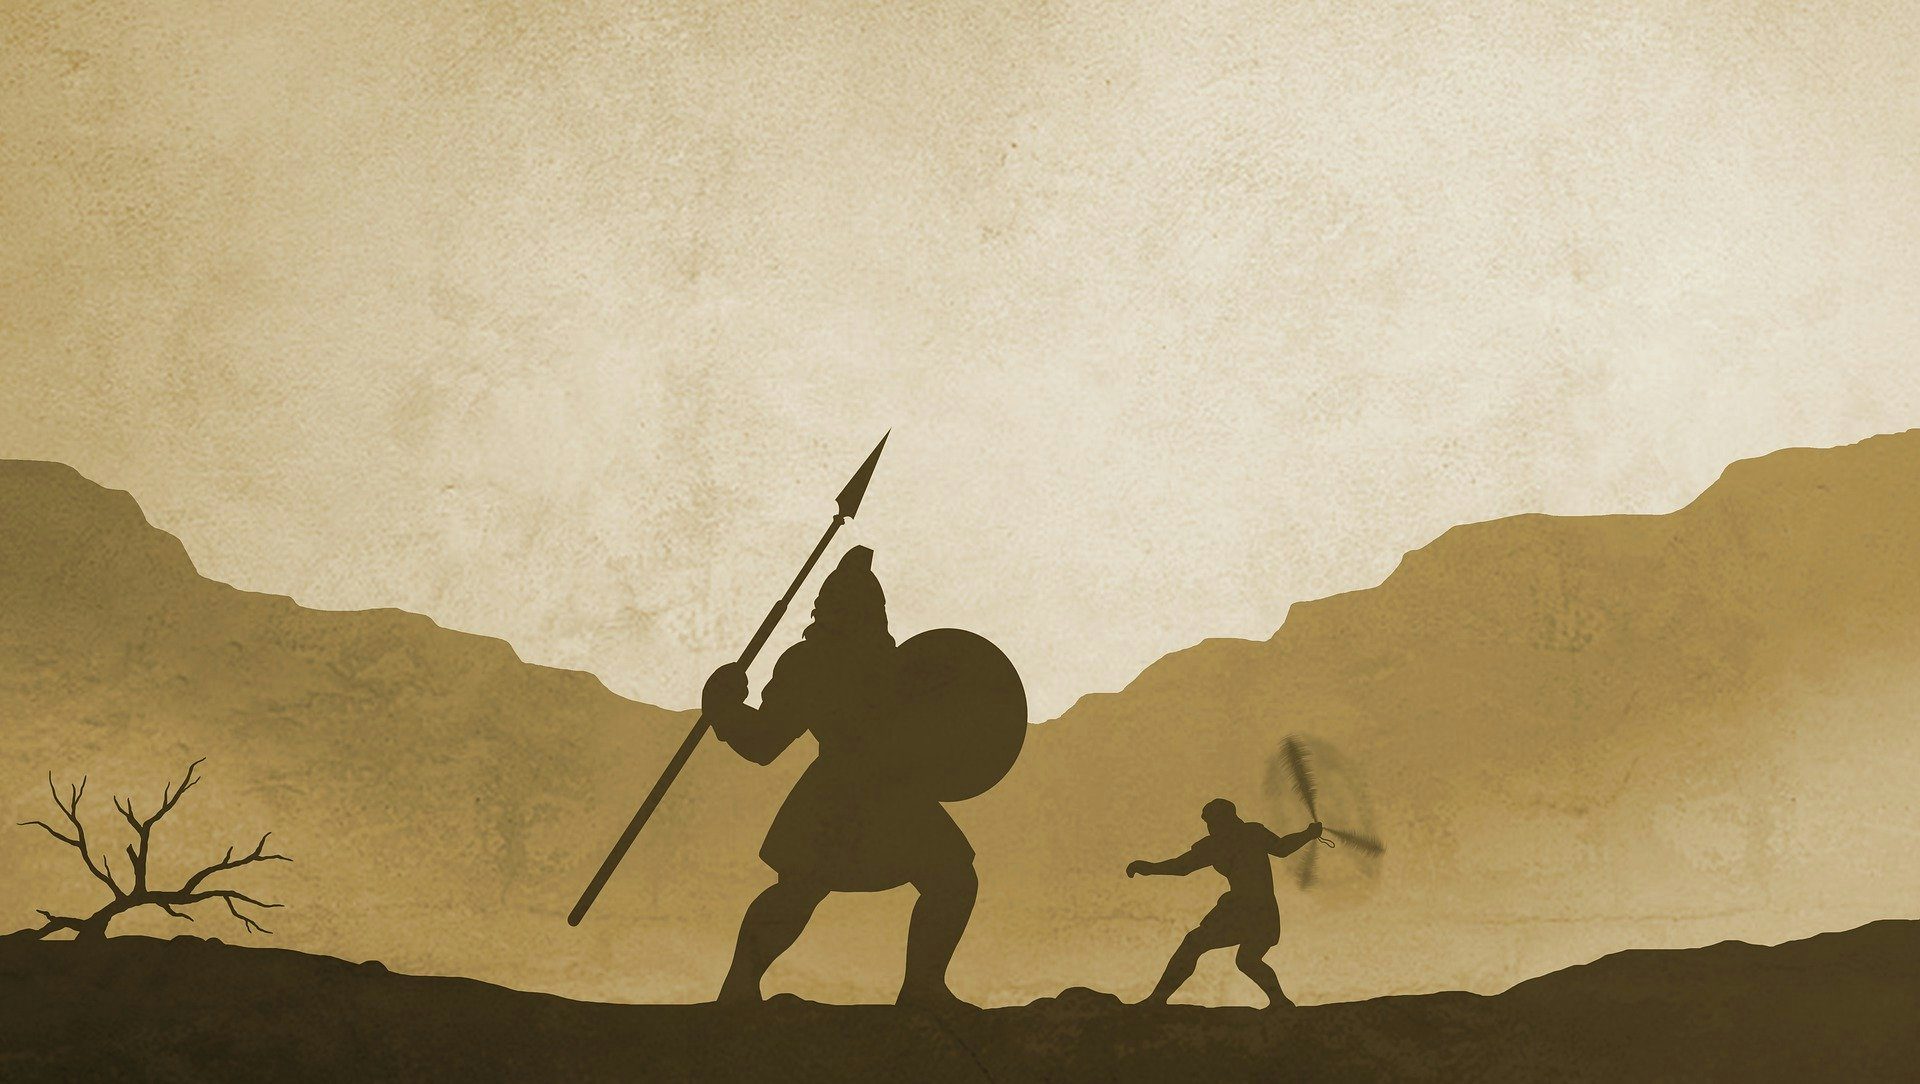 David vs Goliath. Image by Jeff Jacobs on Pixabay - https://pixabay.com/users/jeffjacobs1990-7438739/